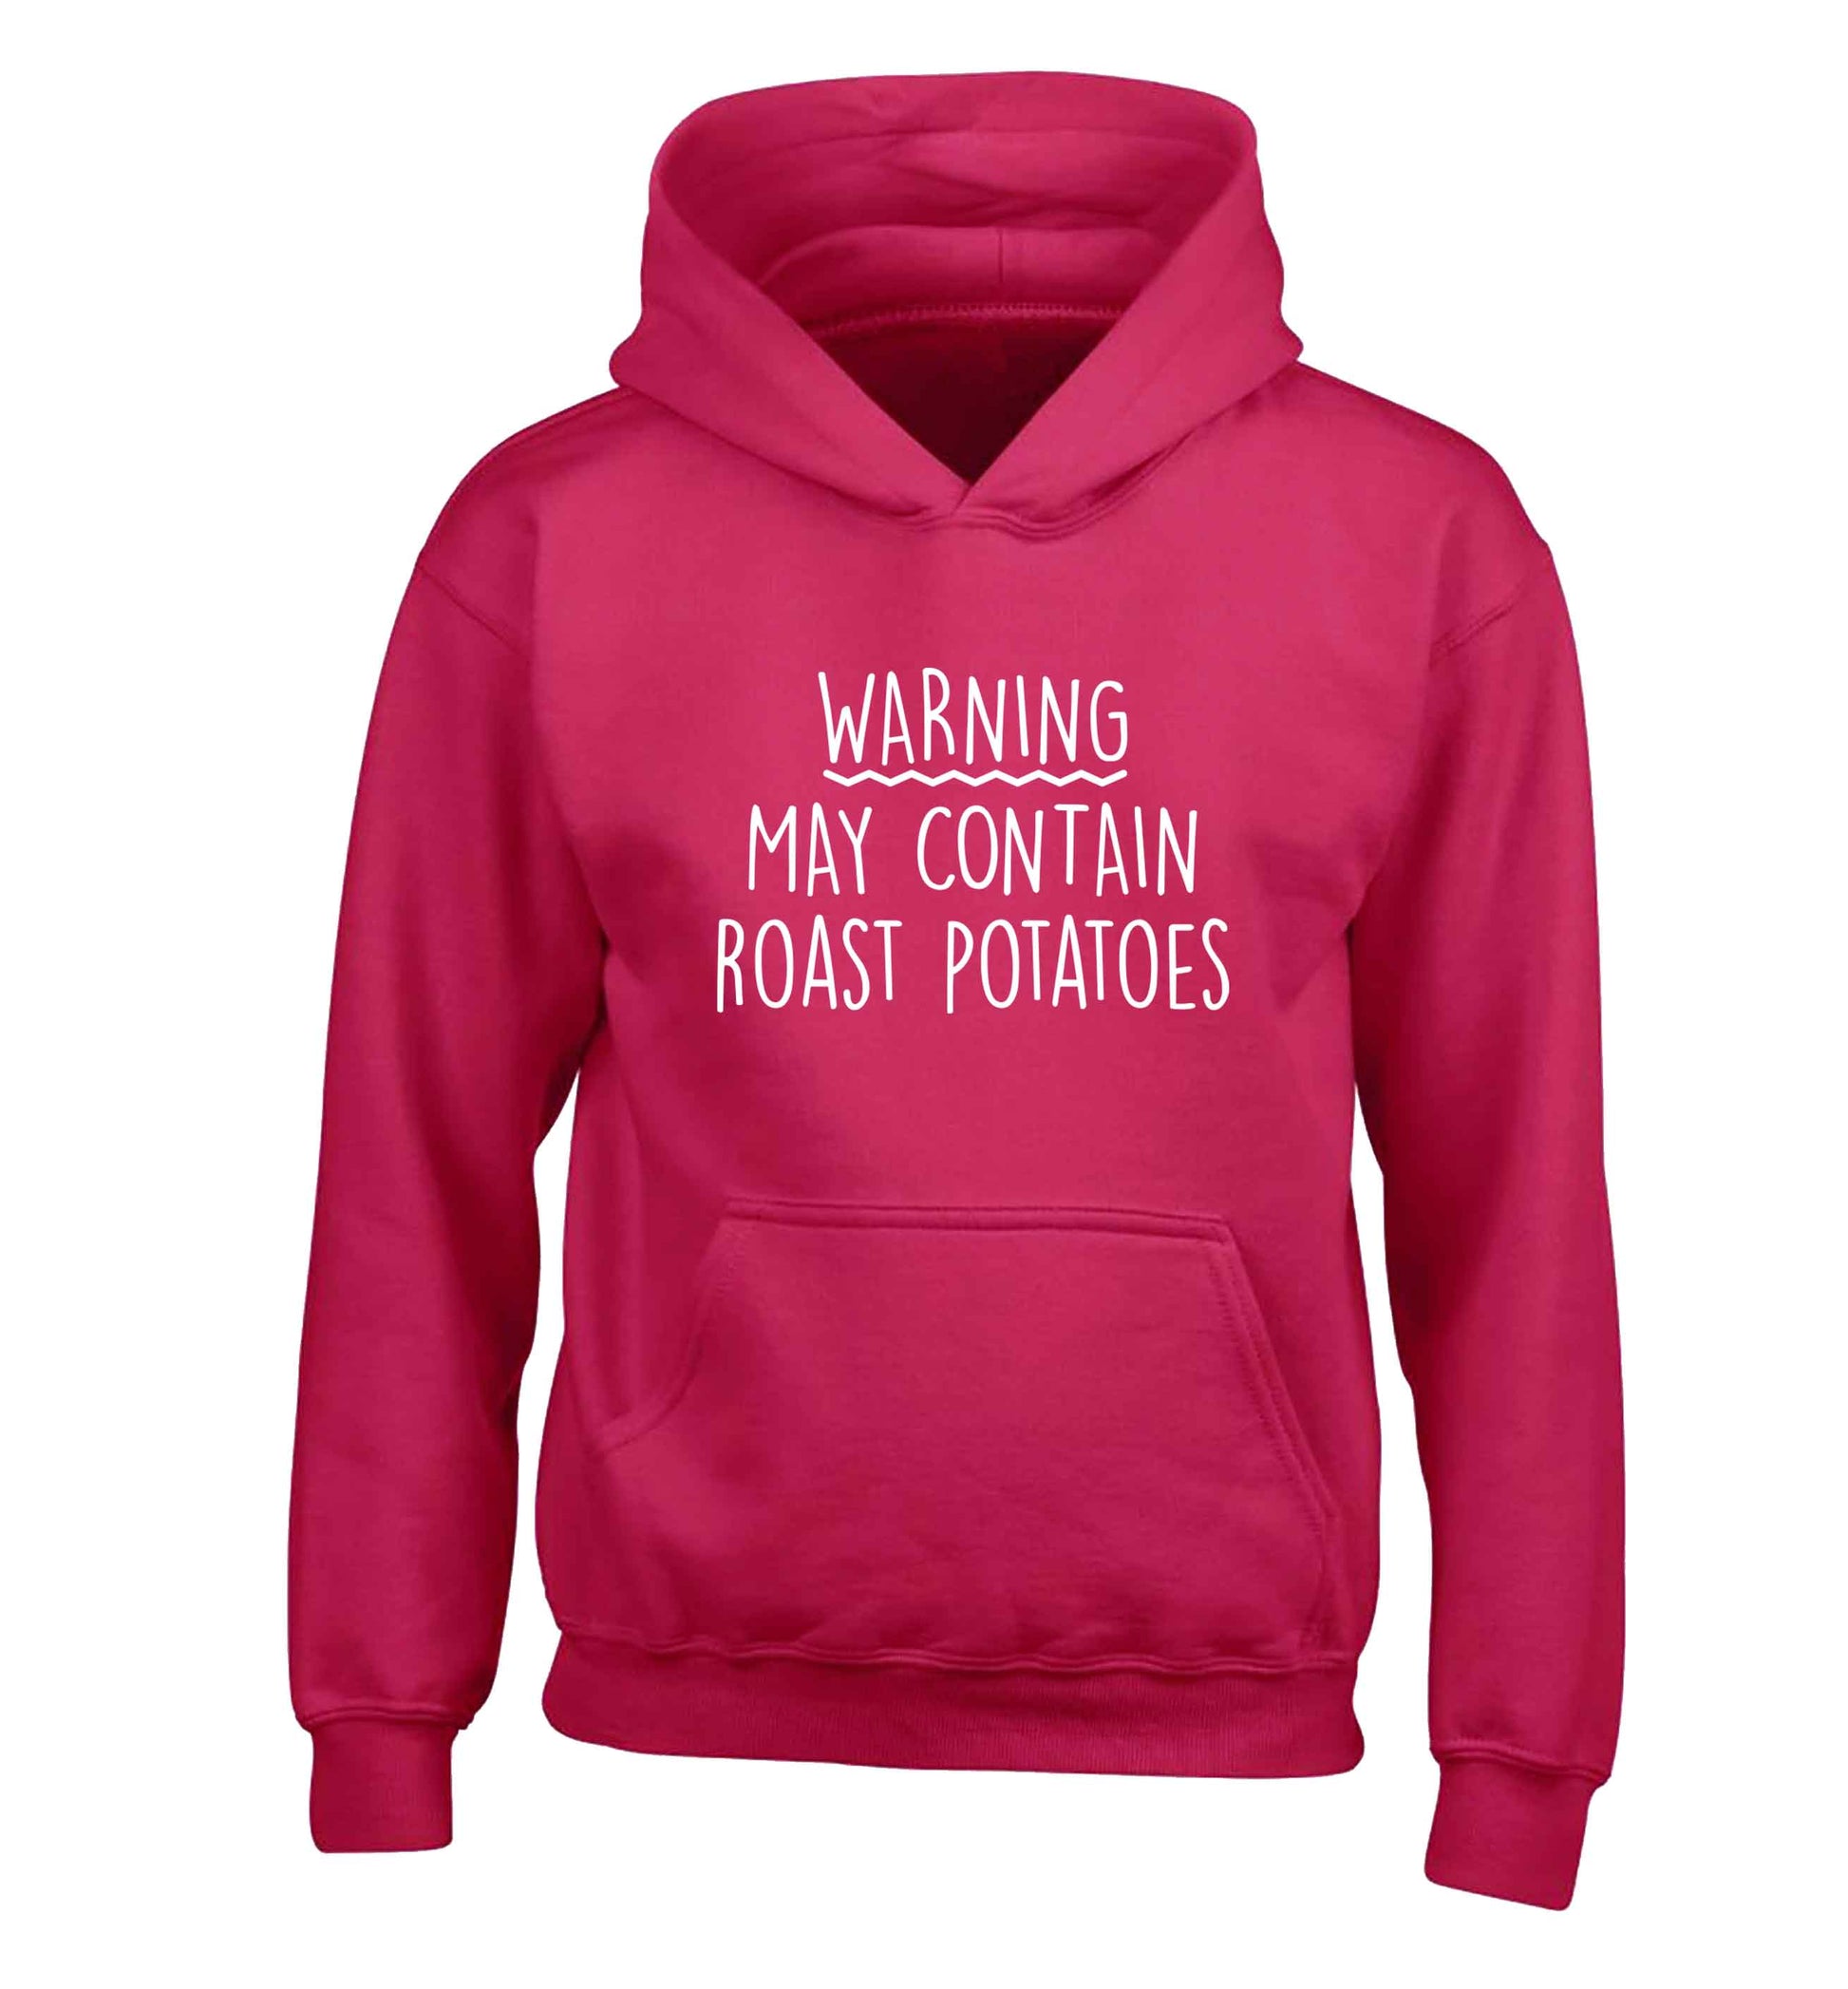 Warning may containg roast potatoes children's pink hoodie 12-13 Years